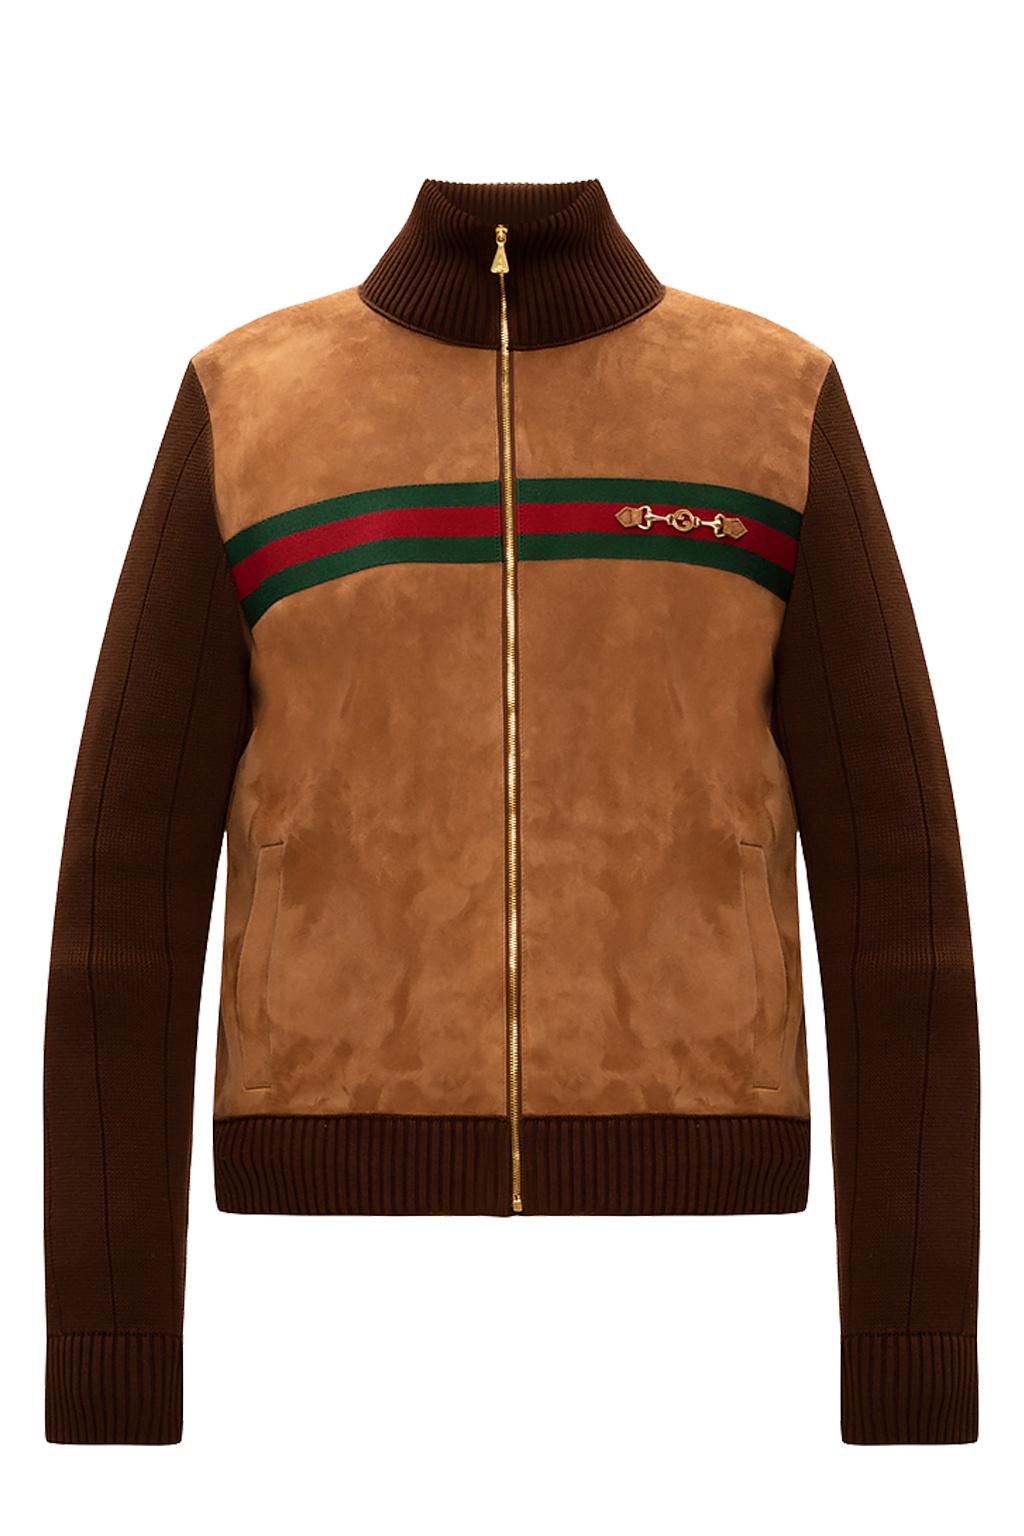 Gucci Branded bomber jacket